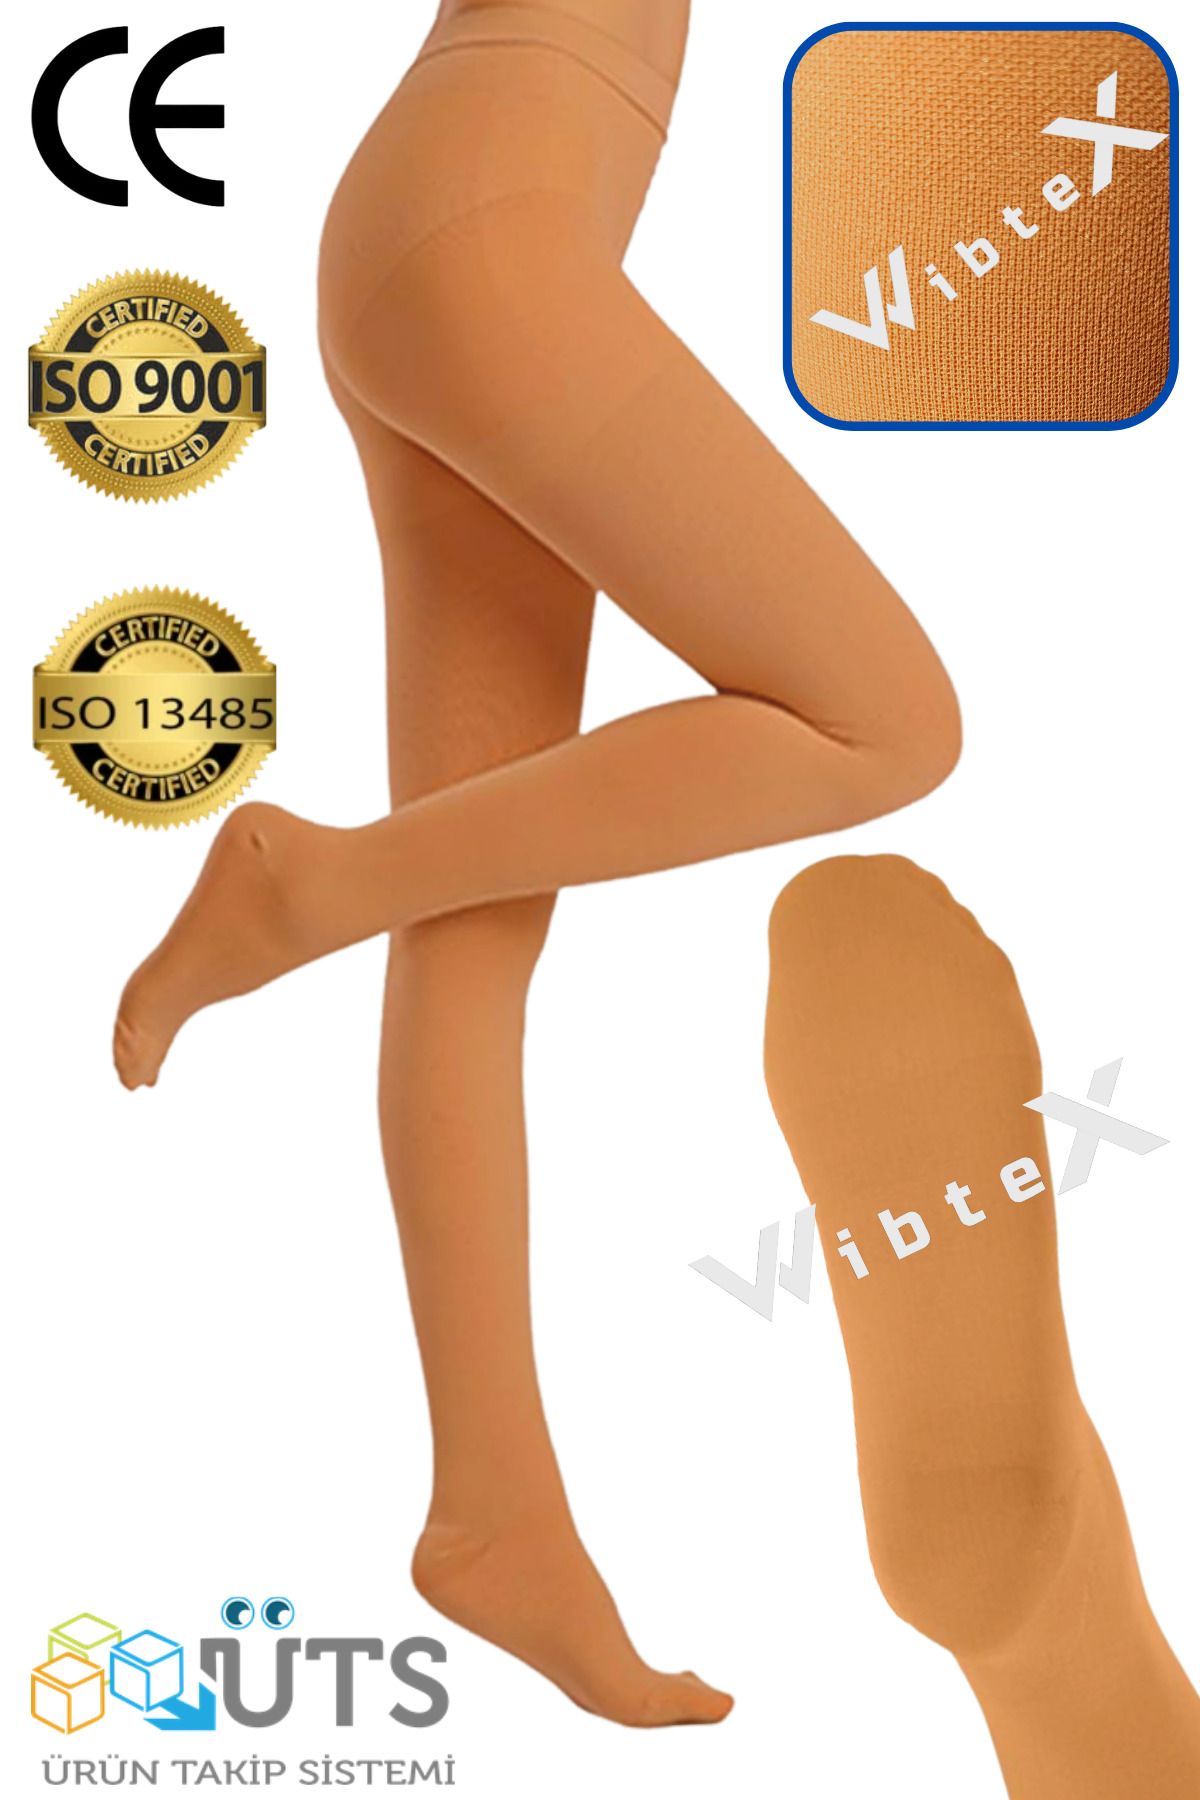 wibtex Külotlu Variss Çorabı Orta Basınç Burnu Kapalı Ccl2çift Bacak